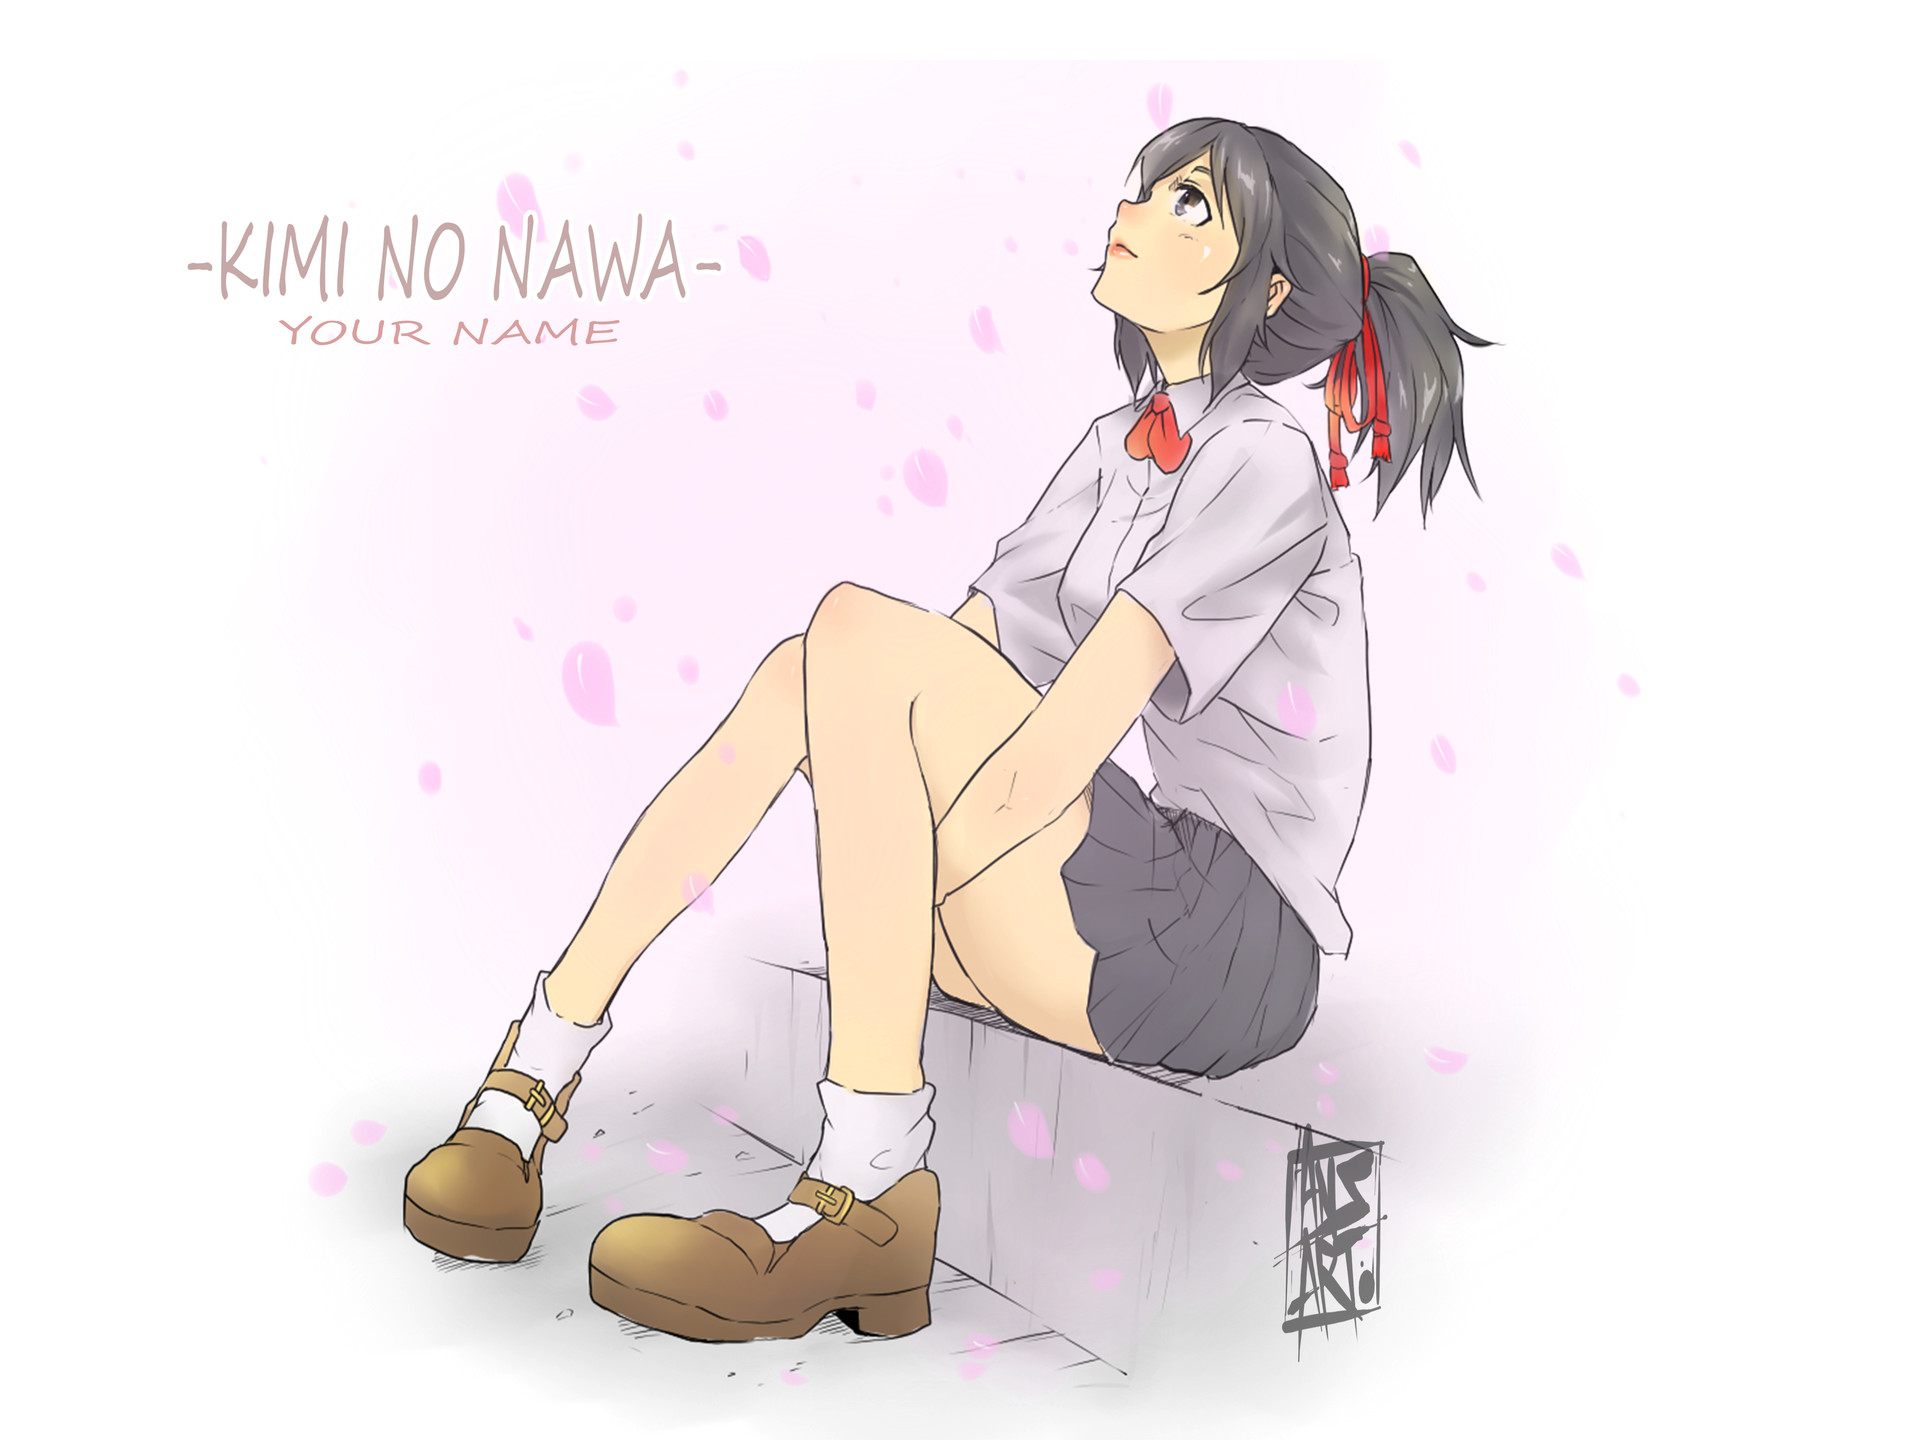 FanArt - Kimi no na wa (Your name) by NoahWooh on DeviantArt